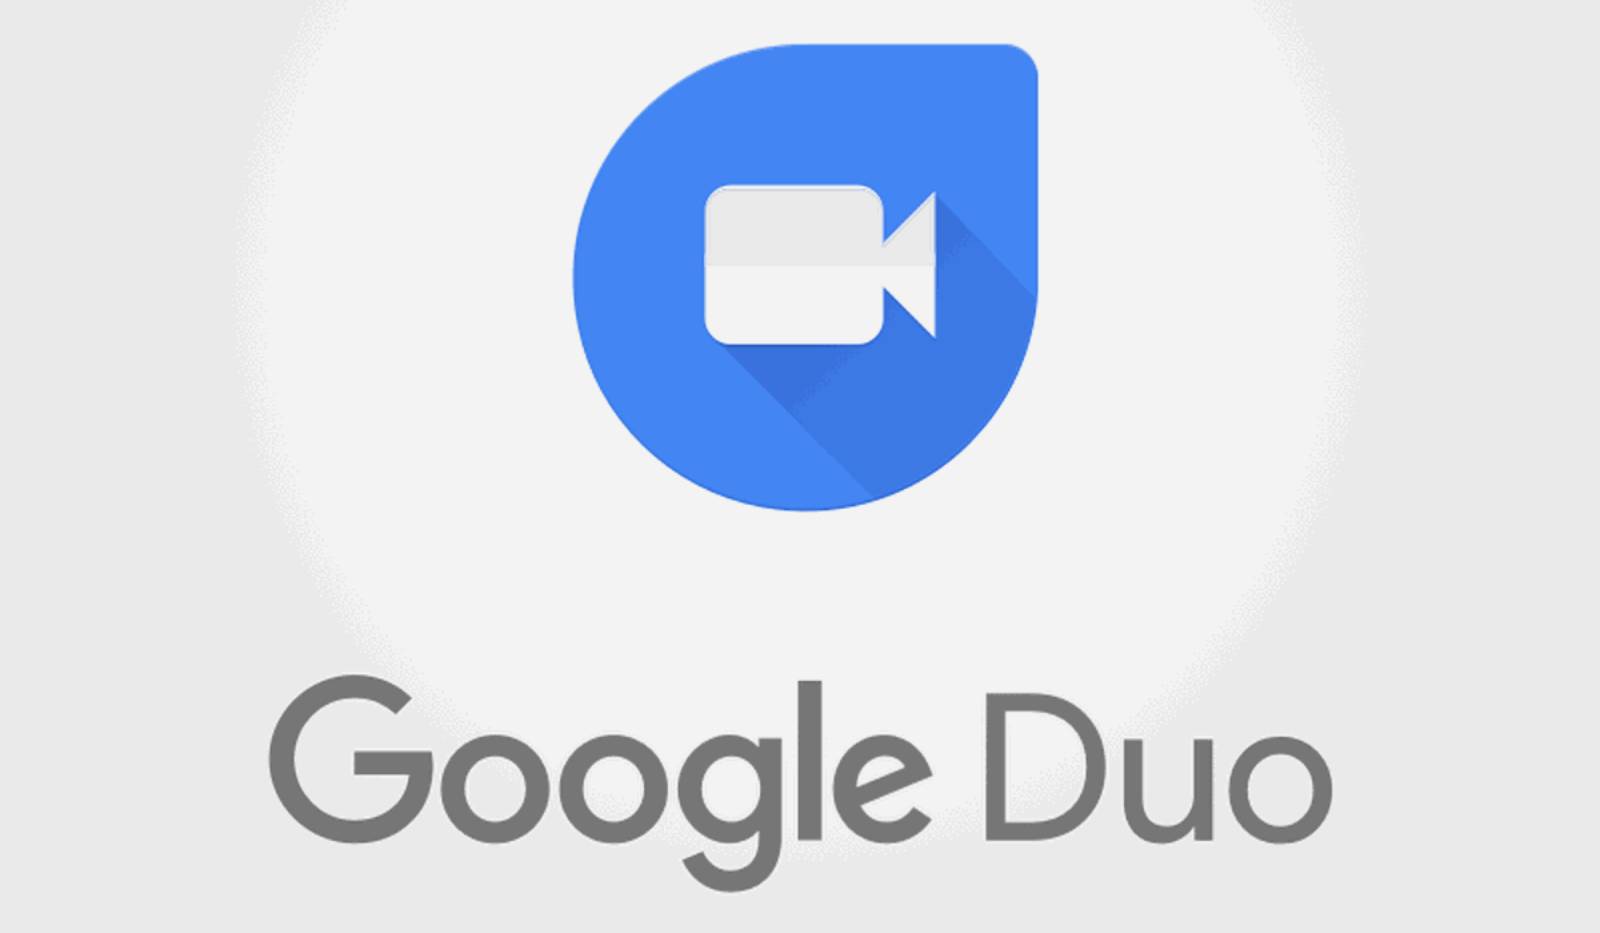 Google Duo photos